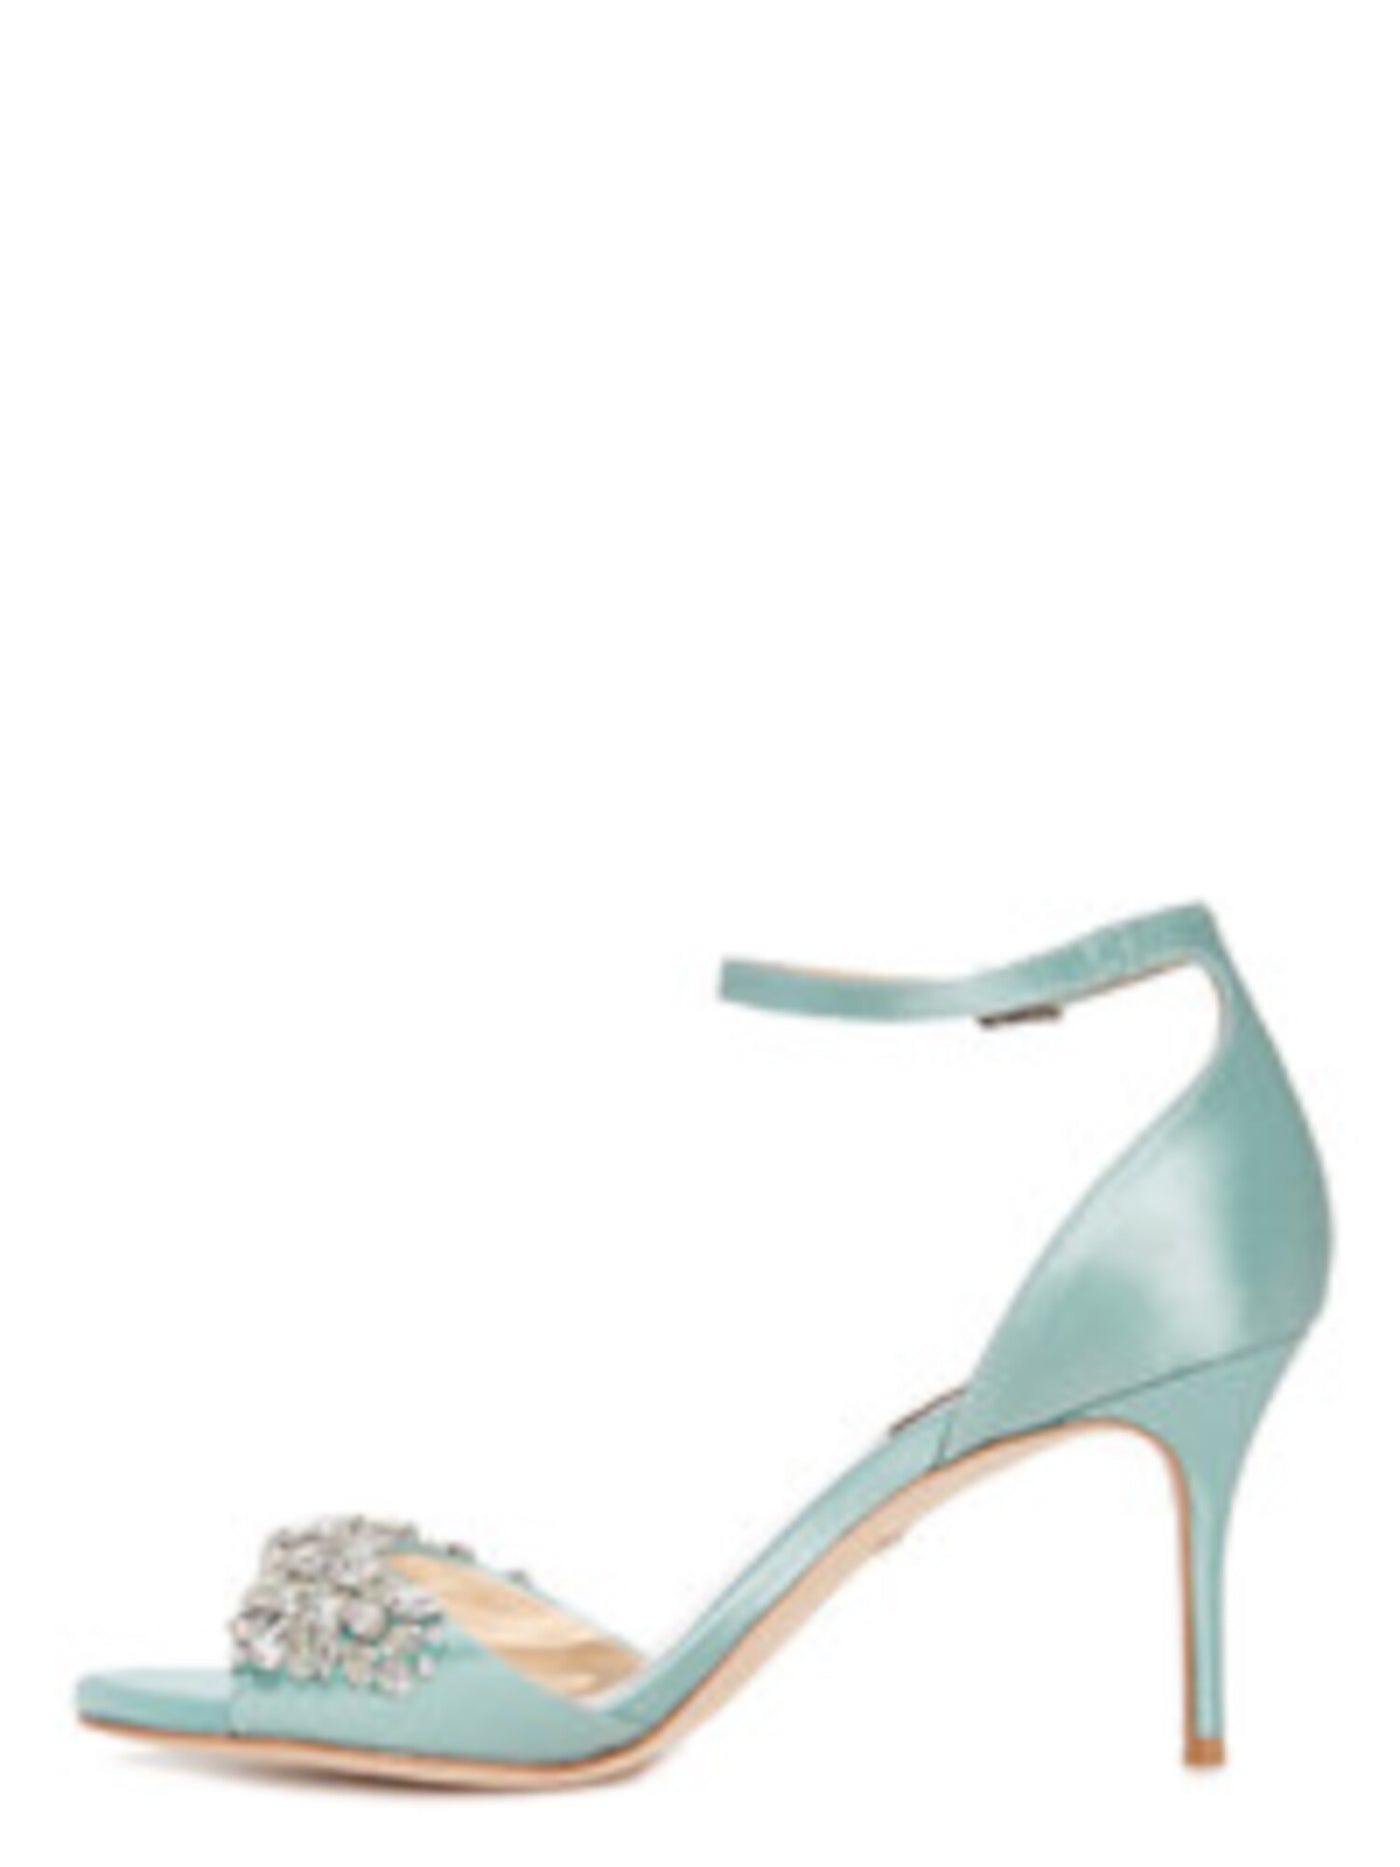 BADGLEY MISCHKA Womens Aqua Ankle Strap Embellished Bankston Round Toe Stiletto Buckle Dress Sandals Shoes 6